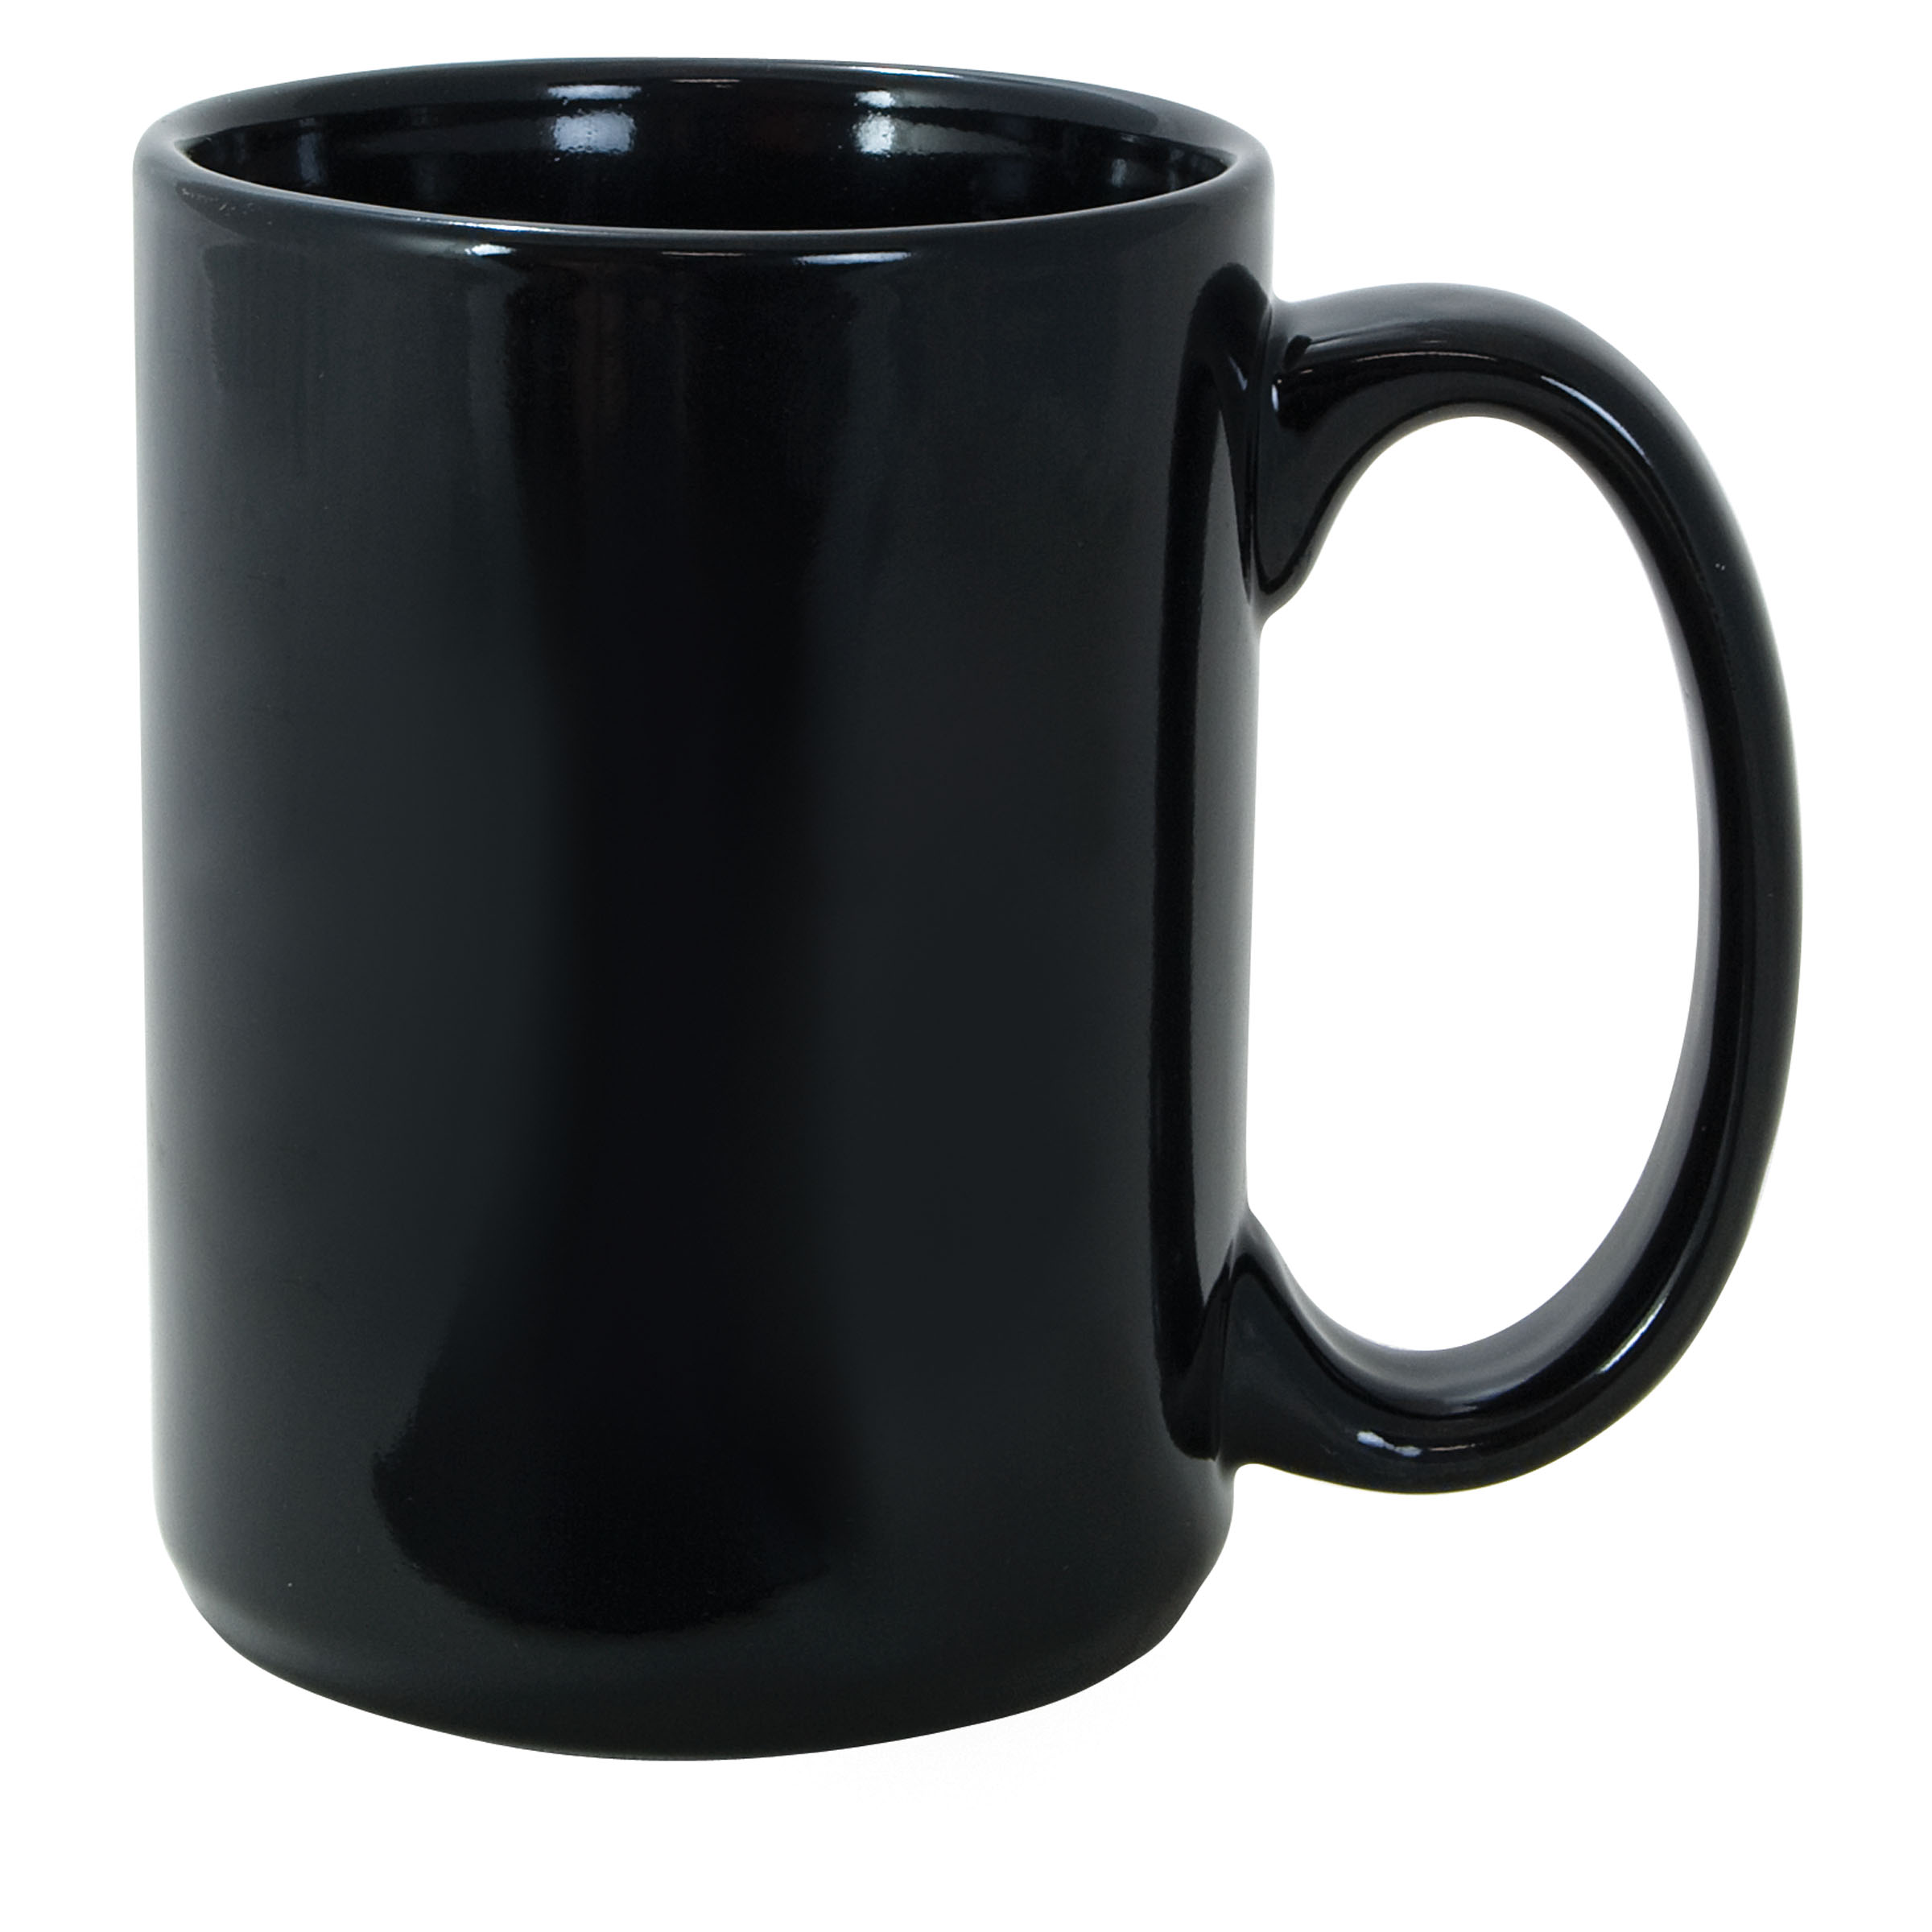 Donald Trump-Fuck-Your-Feelings Mug Funny Ceramic Coffee Mug Gift For Men Women 